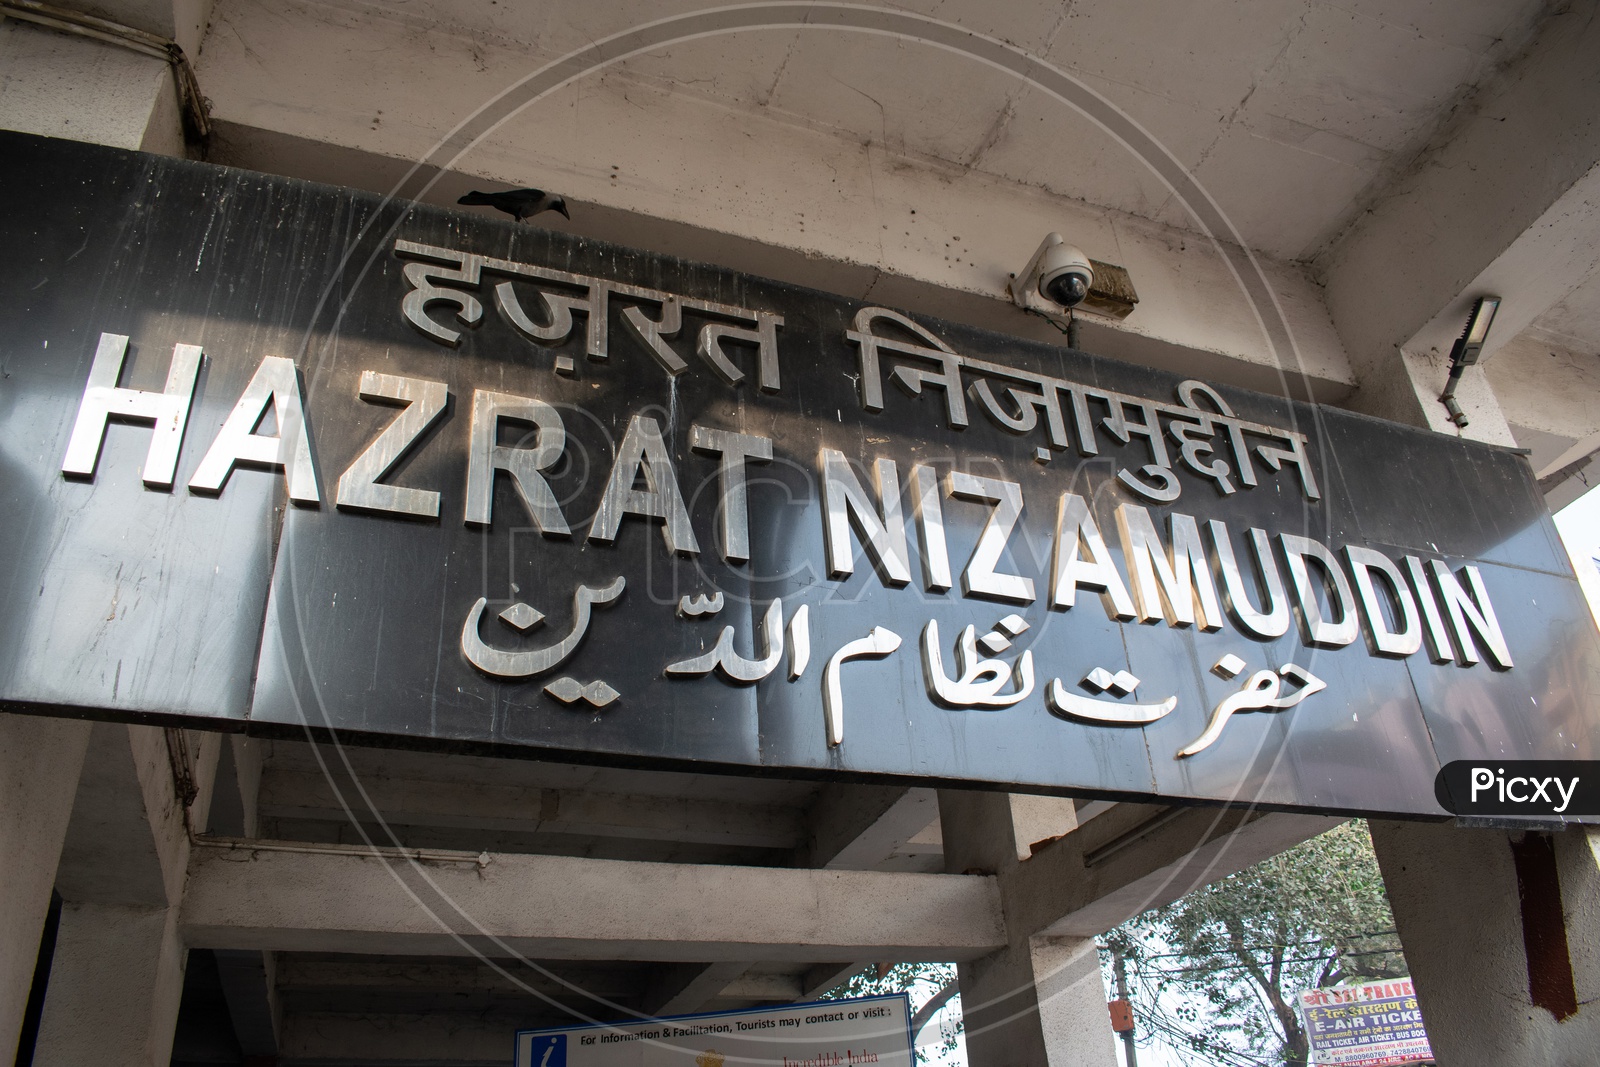 Hazrat Nizamuddin railway station